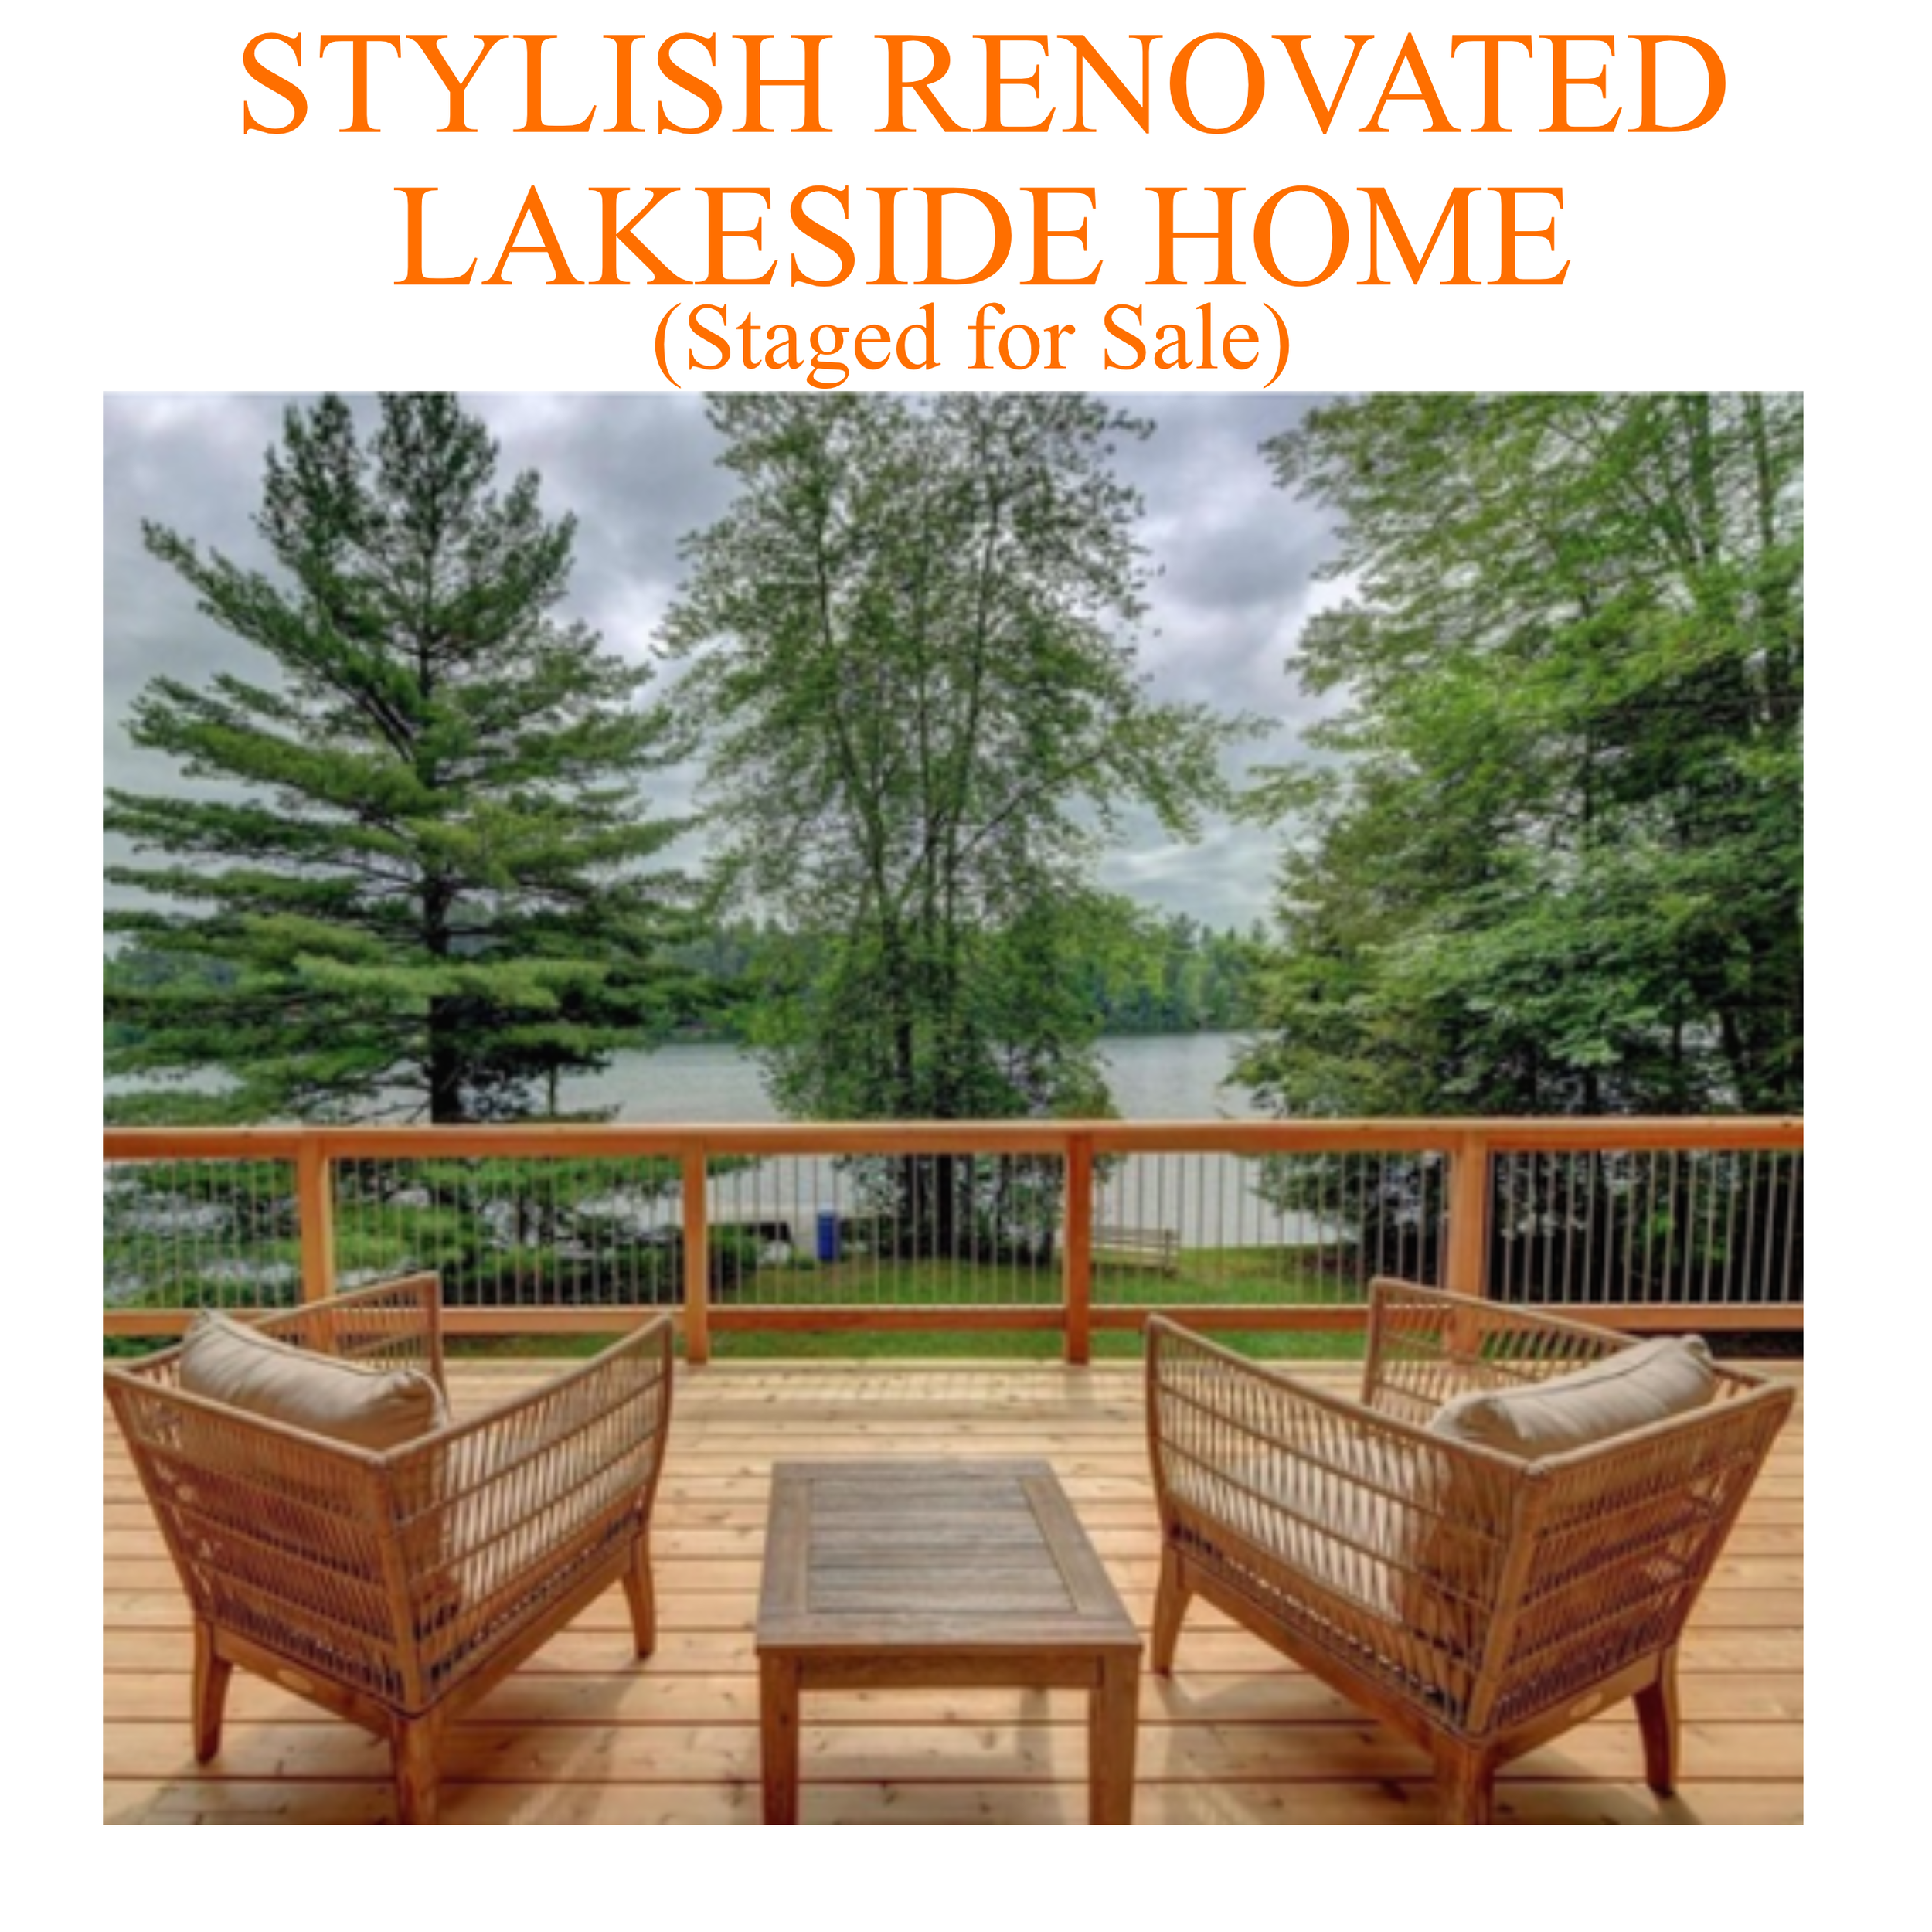 Stylish Renovated Lakeside Home.png